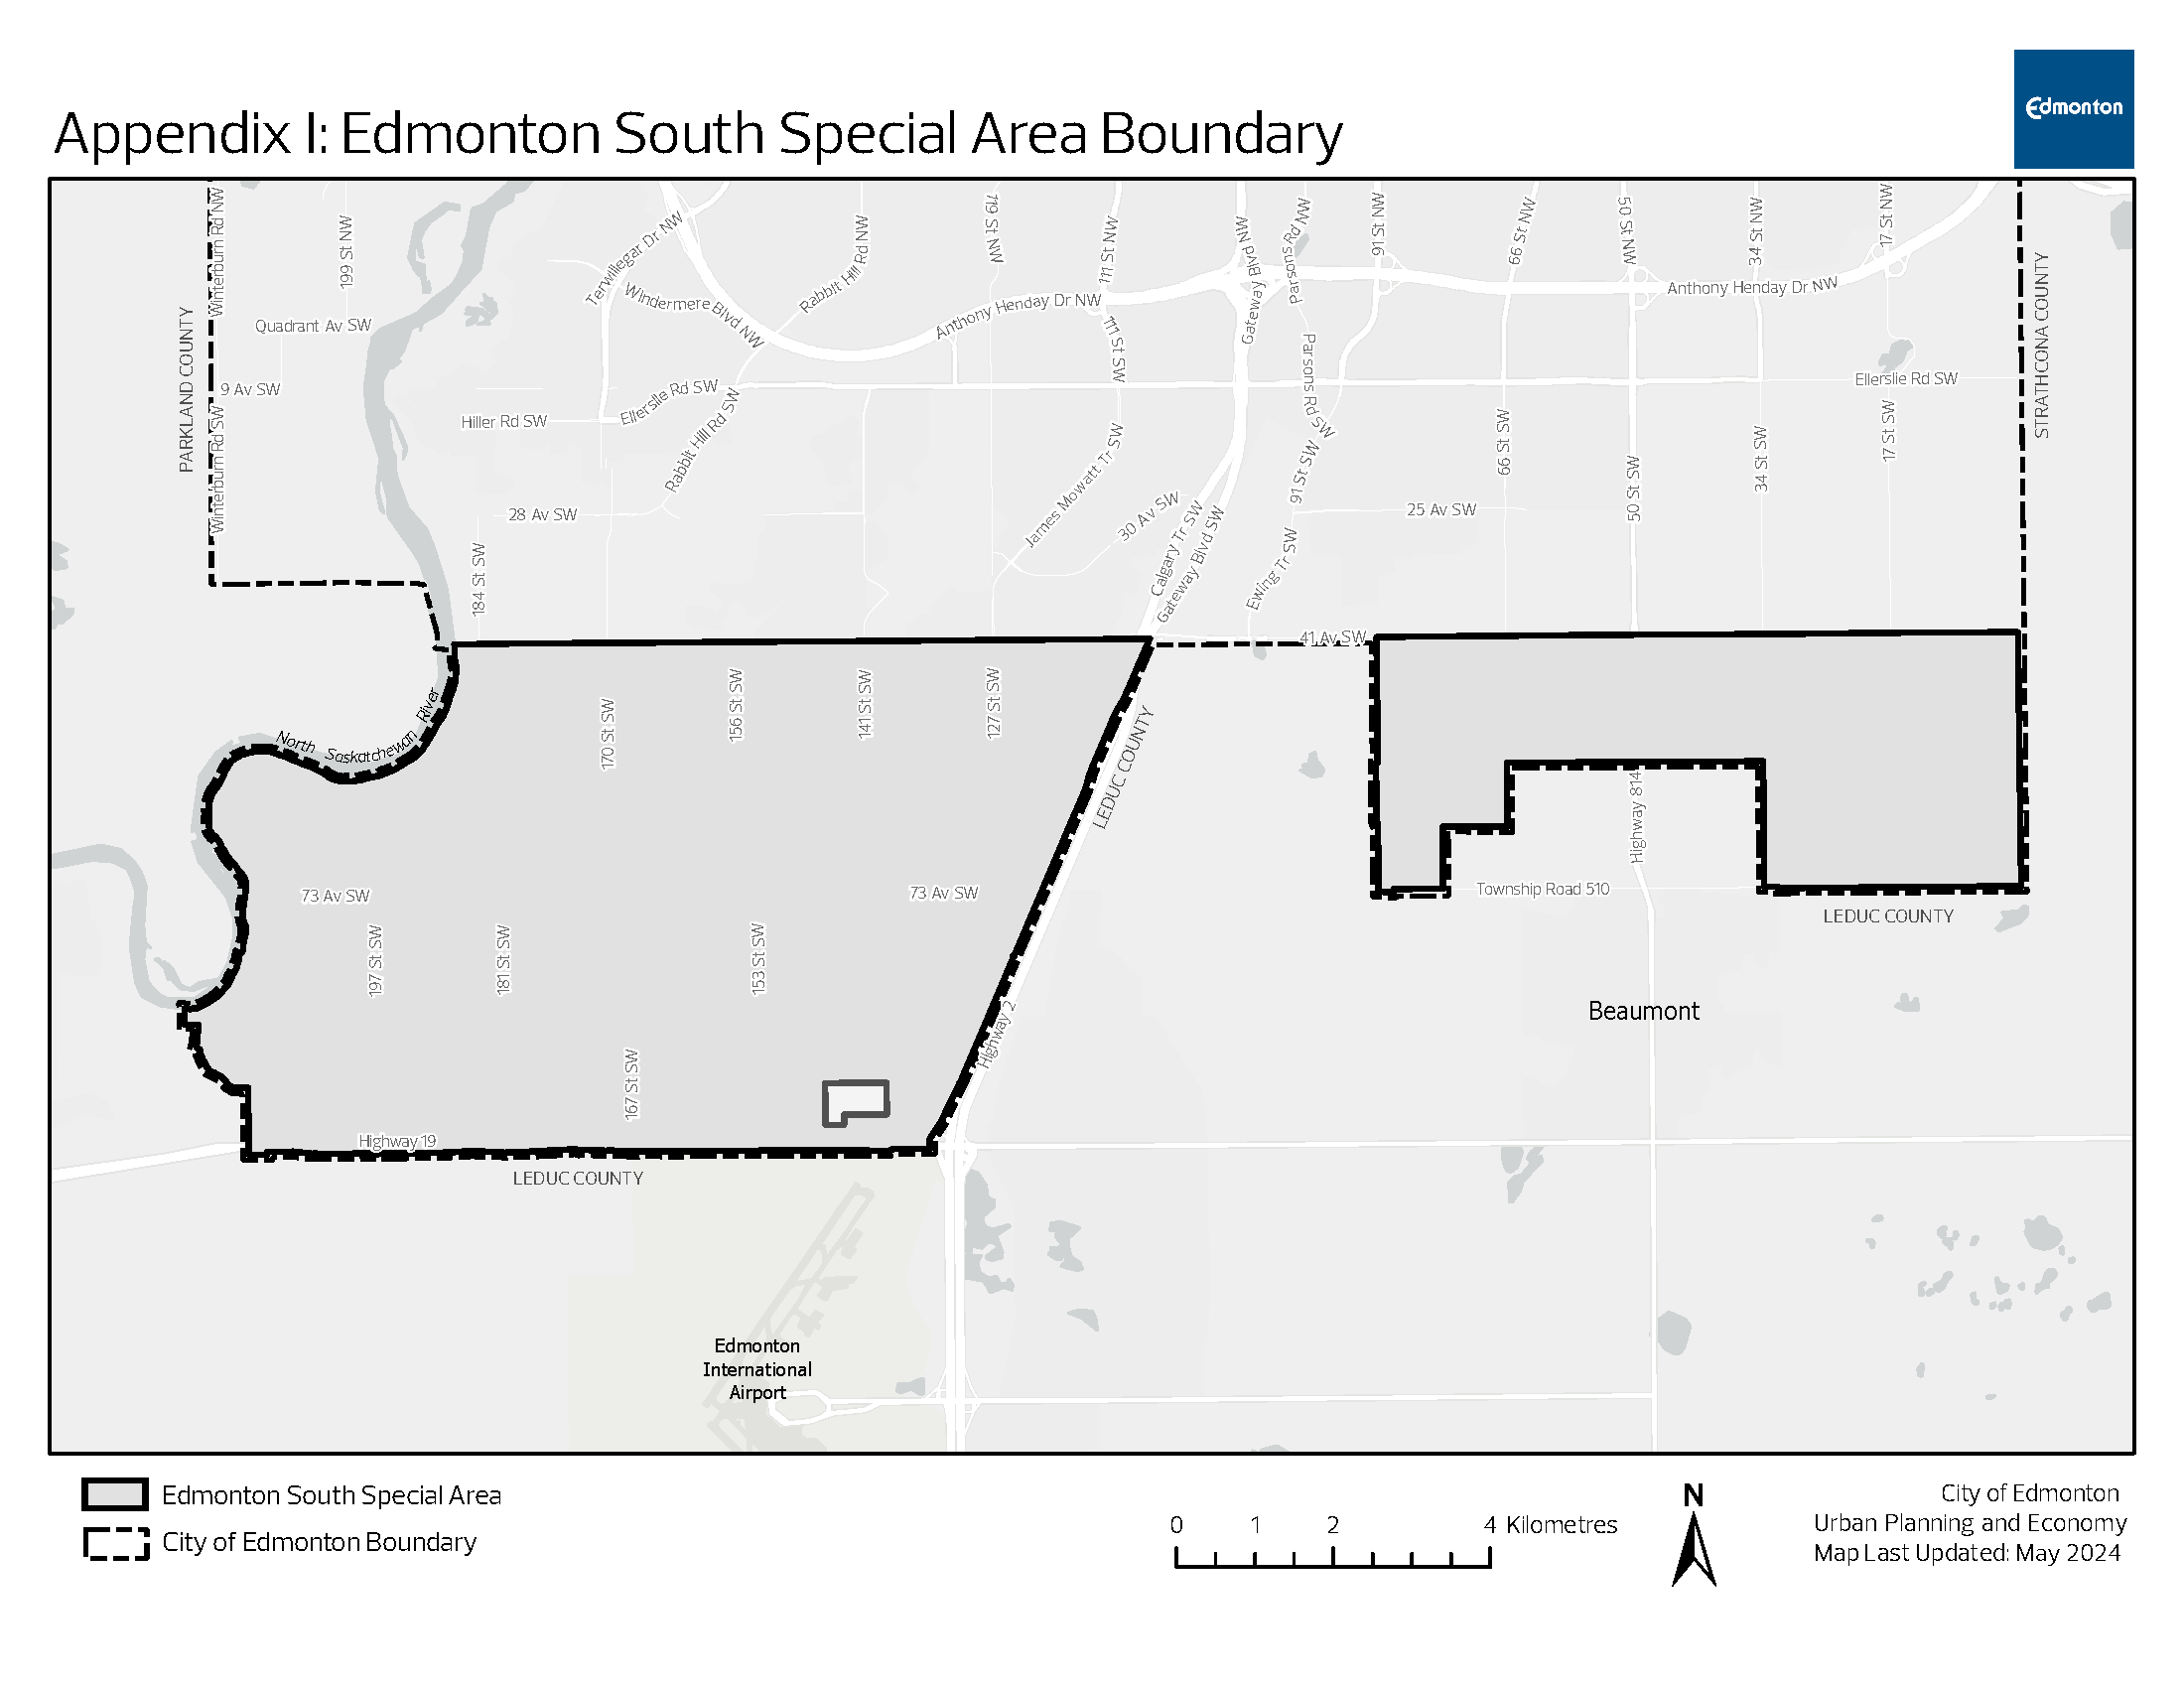 Edmonton South Special Area Map Image